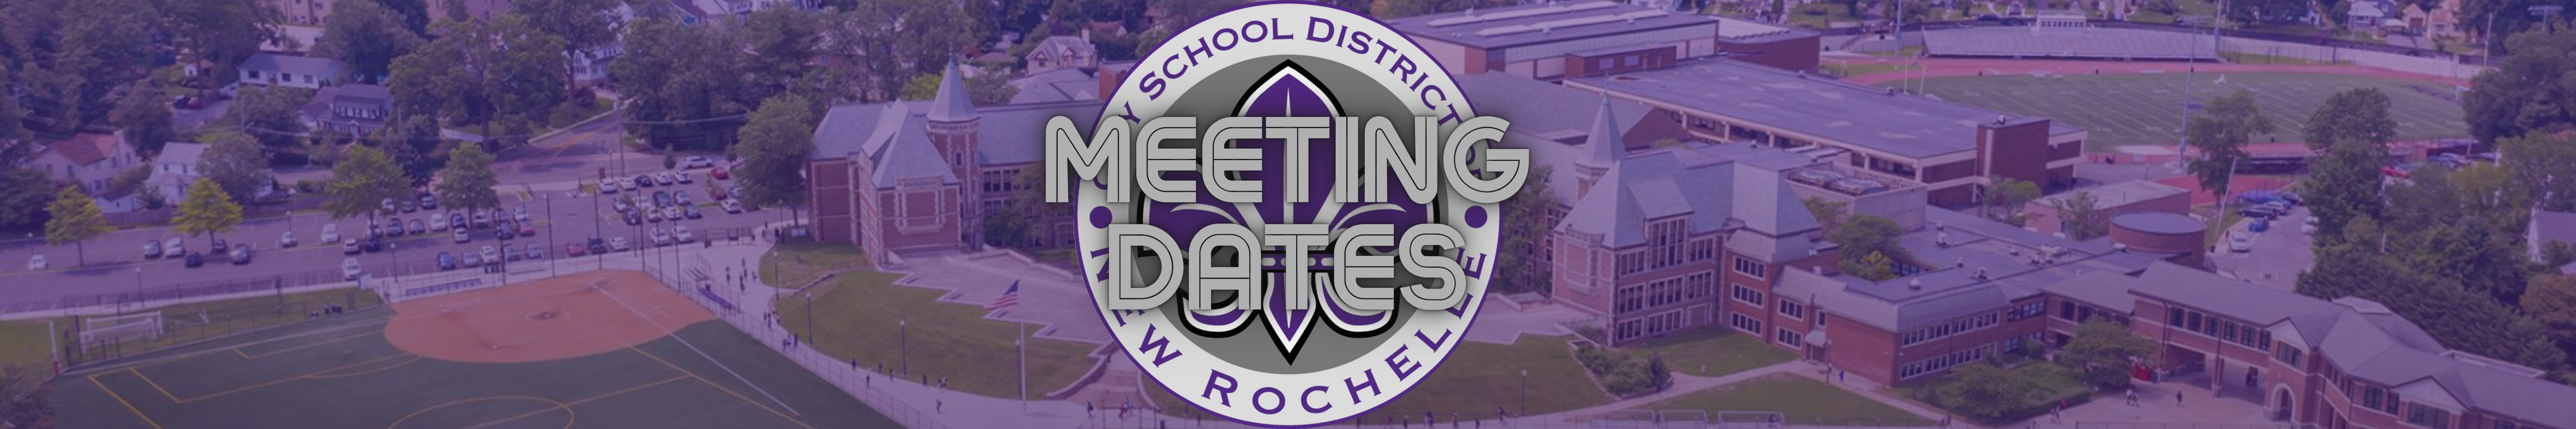 meeting dates banner